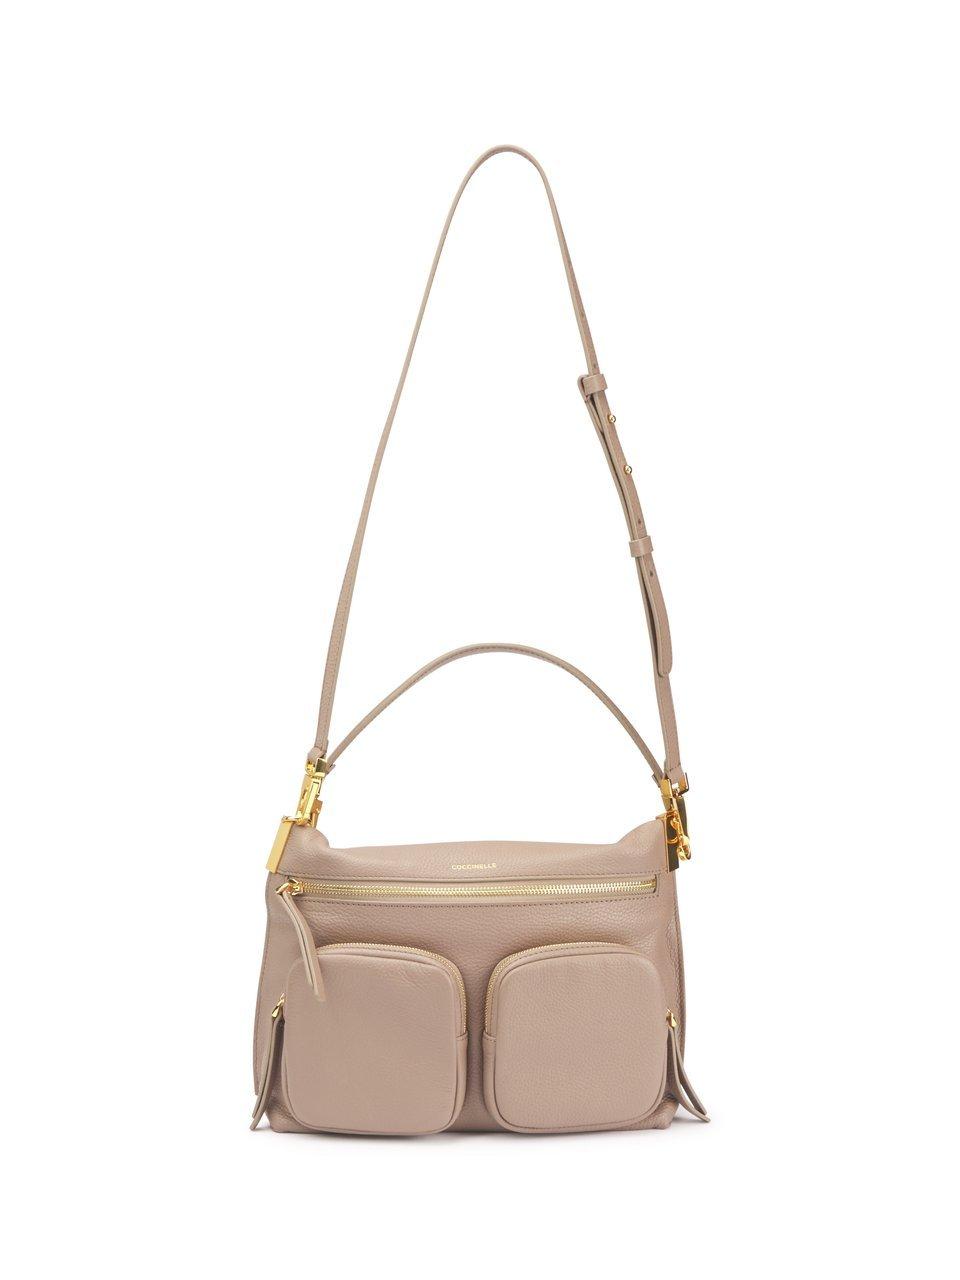 Image of Handbag Coccinelle beige